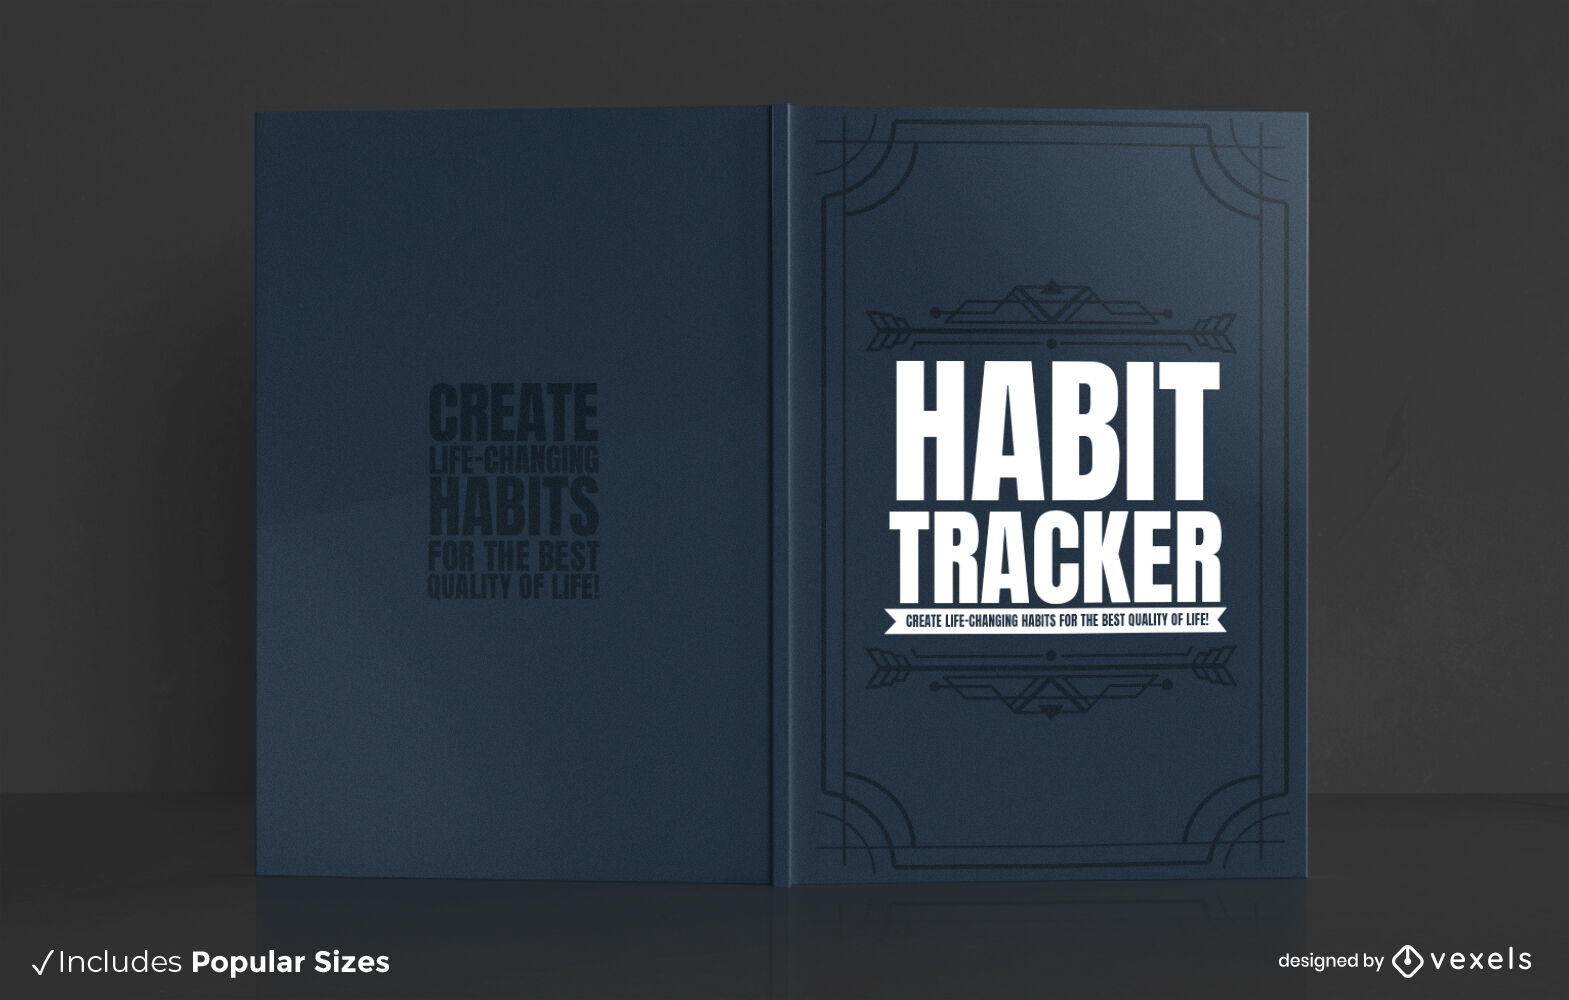 Habit tracker book cover design KDP